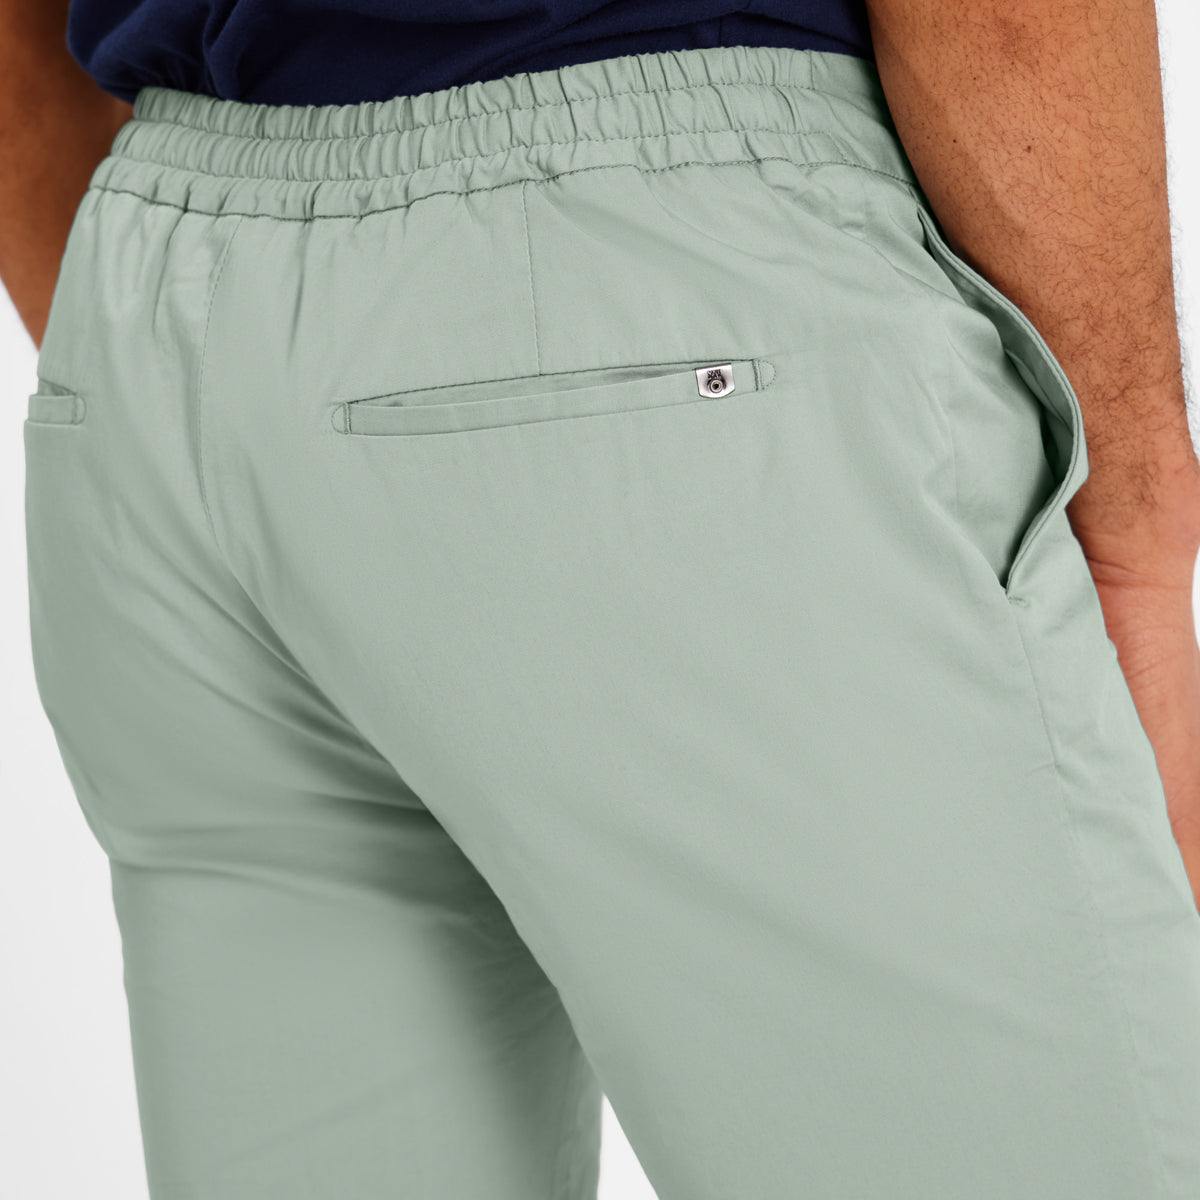 SPOKE Friday Shorts - Aqua Grey Custom Fit Shorts - SPOKE